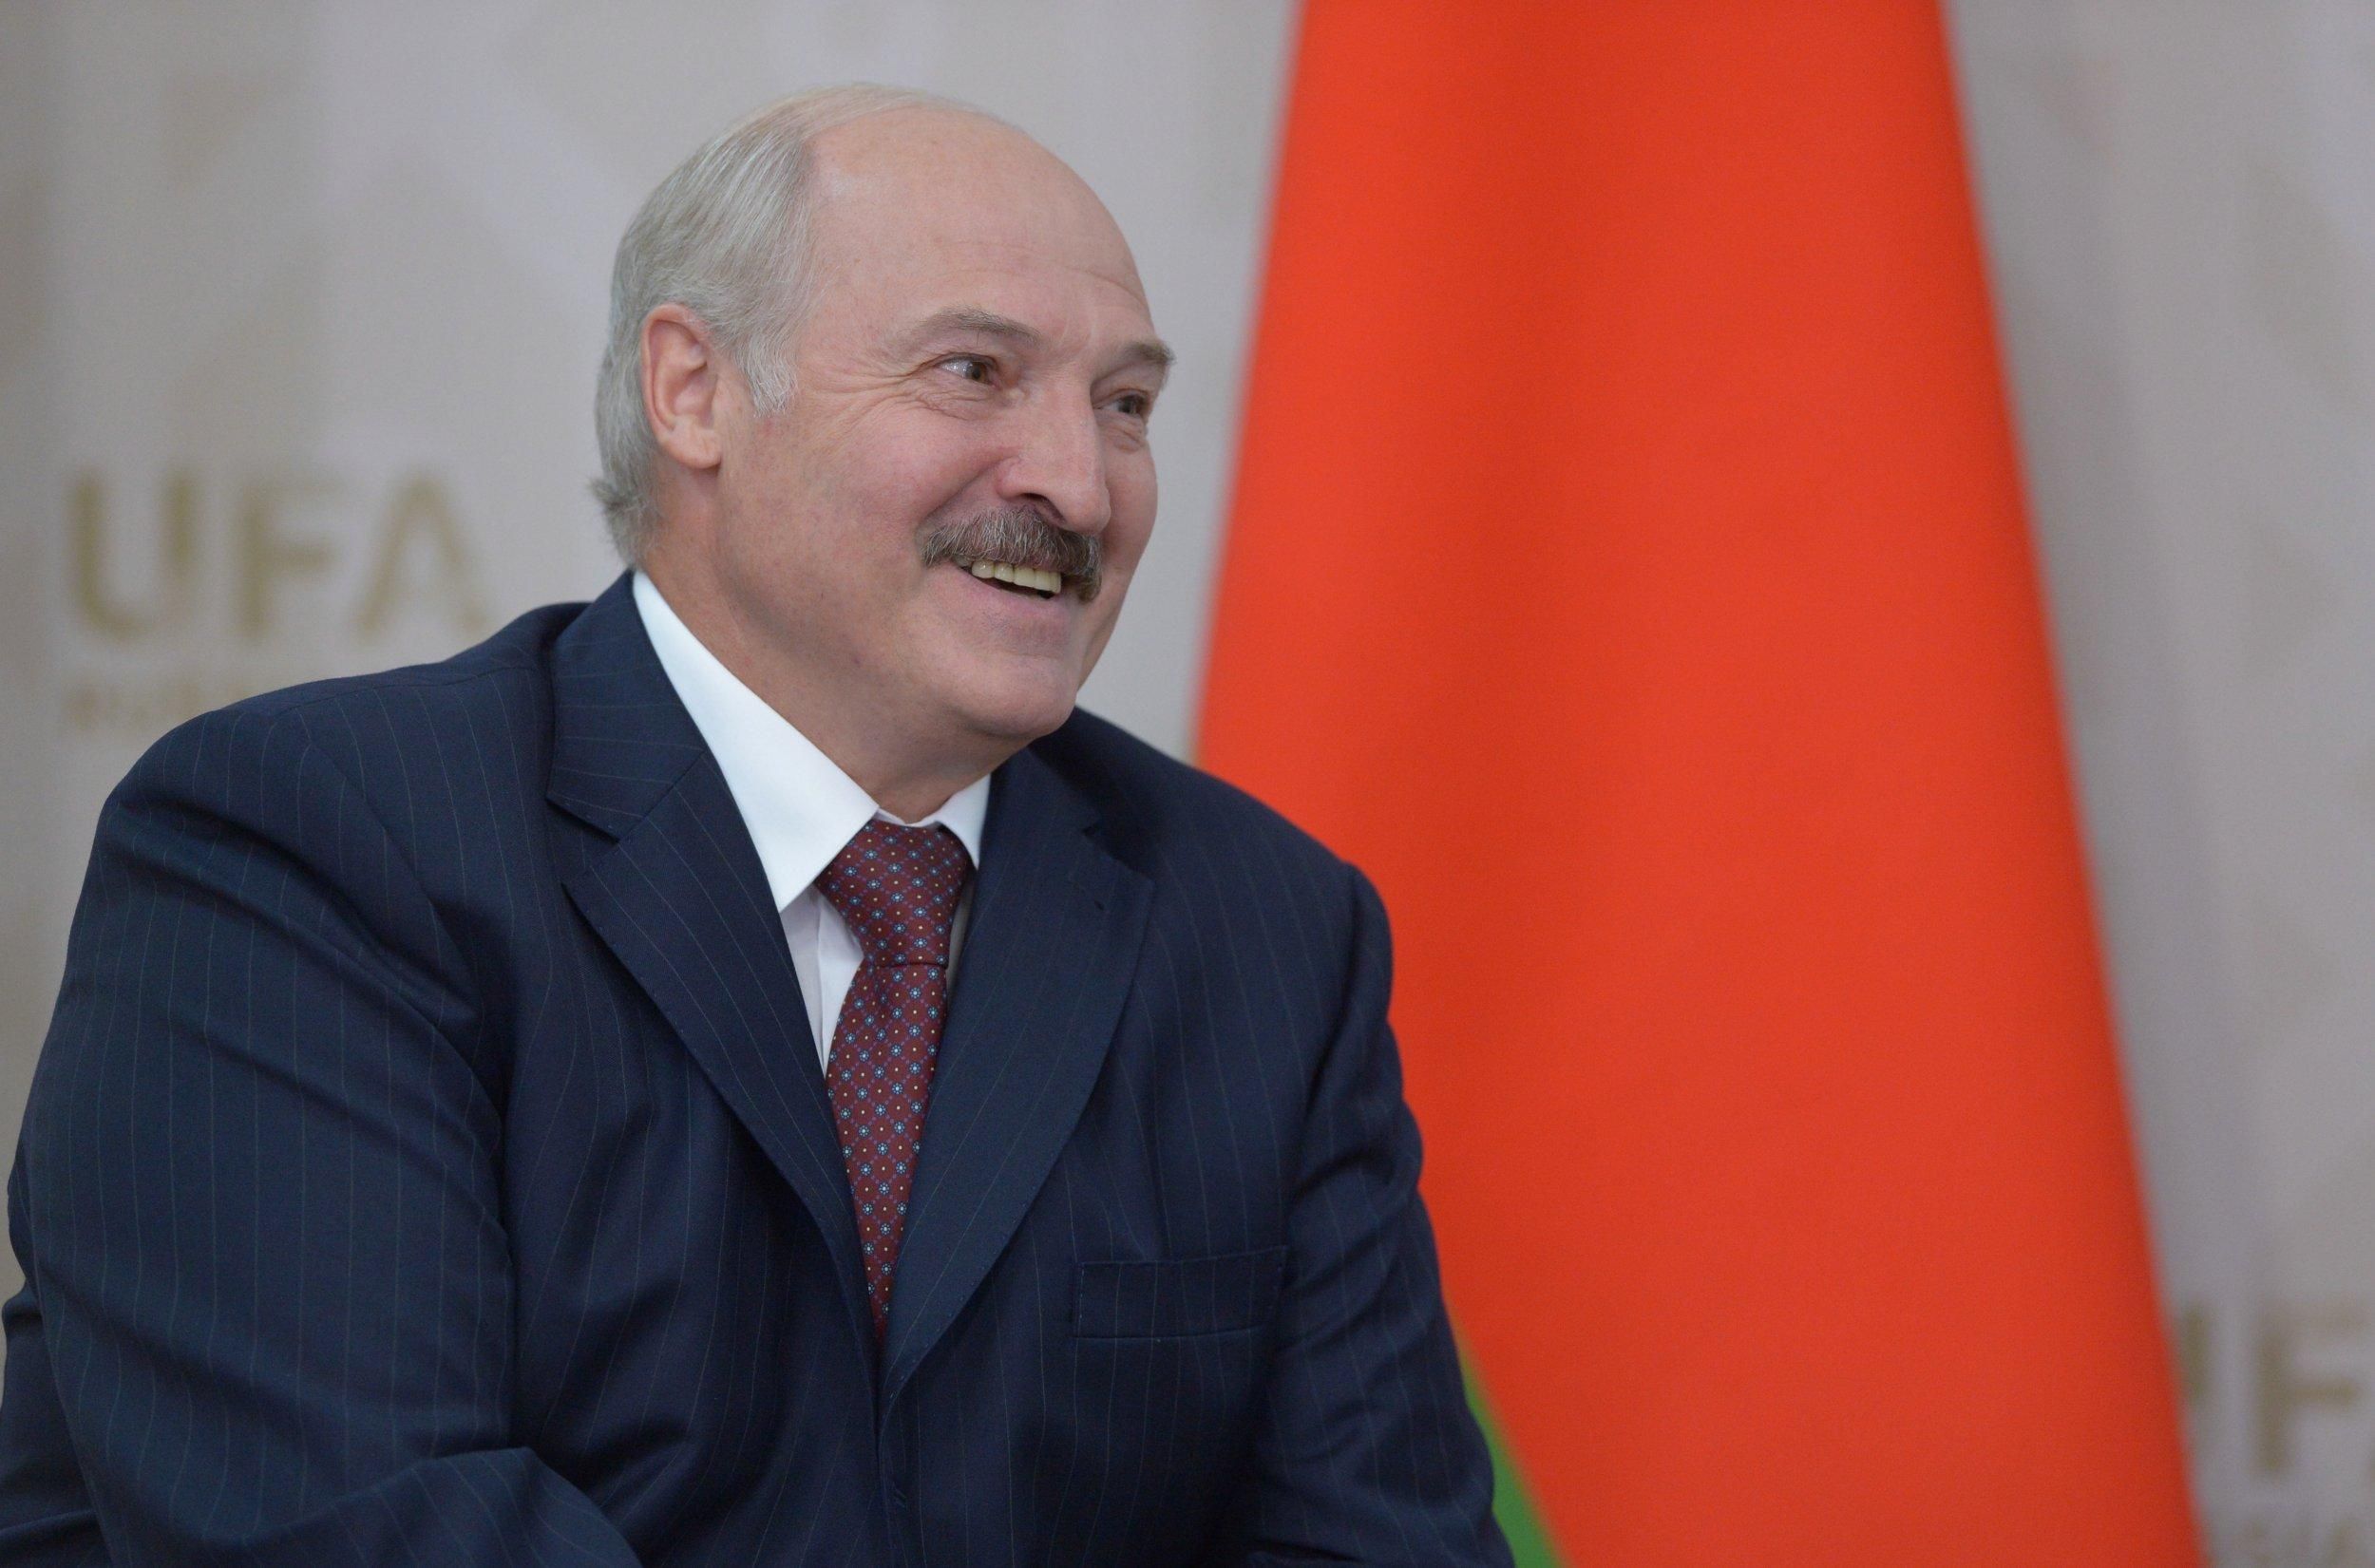 Снова говорил о недоверии: Лукашенко поздравил Украину с Днем Независимости